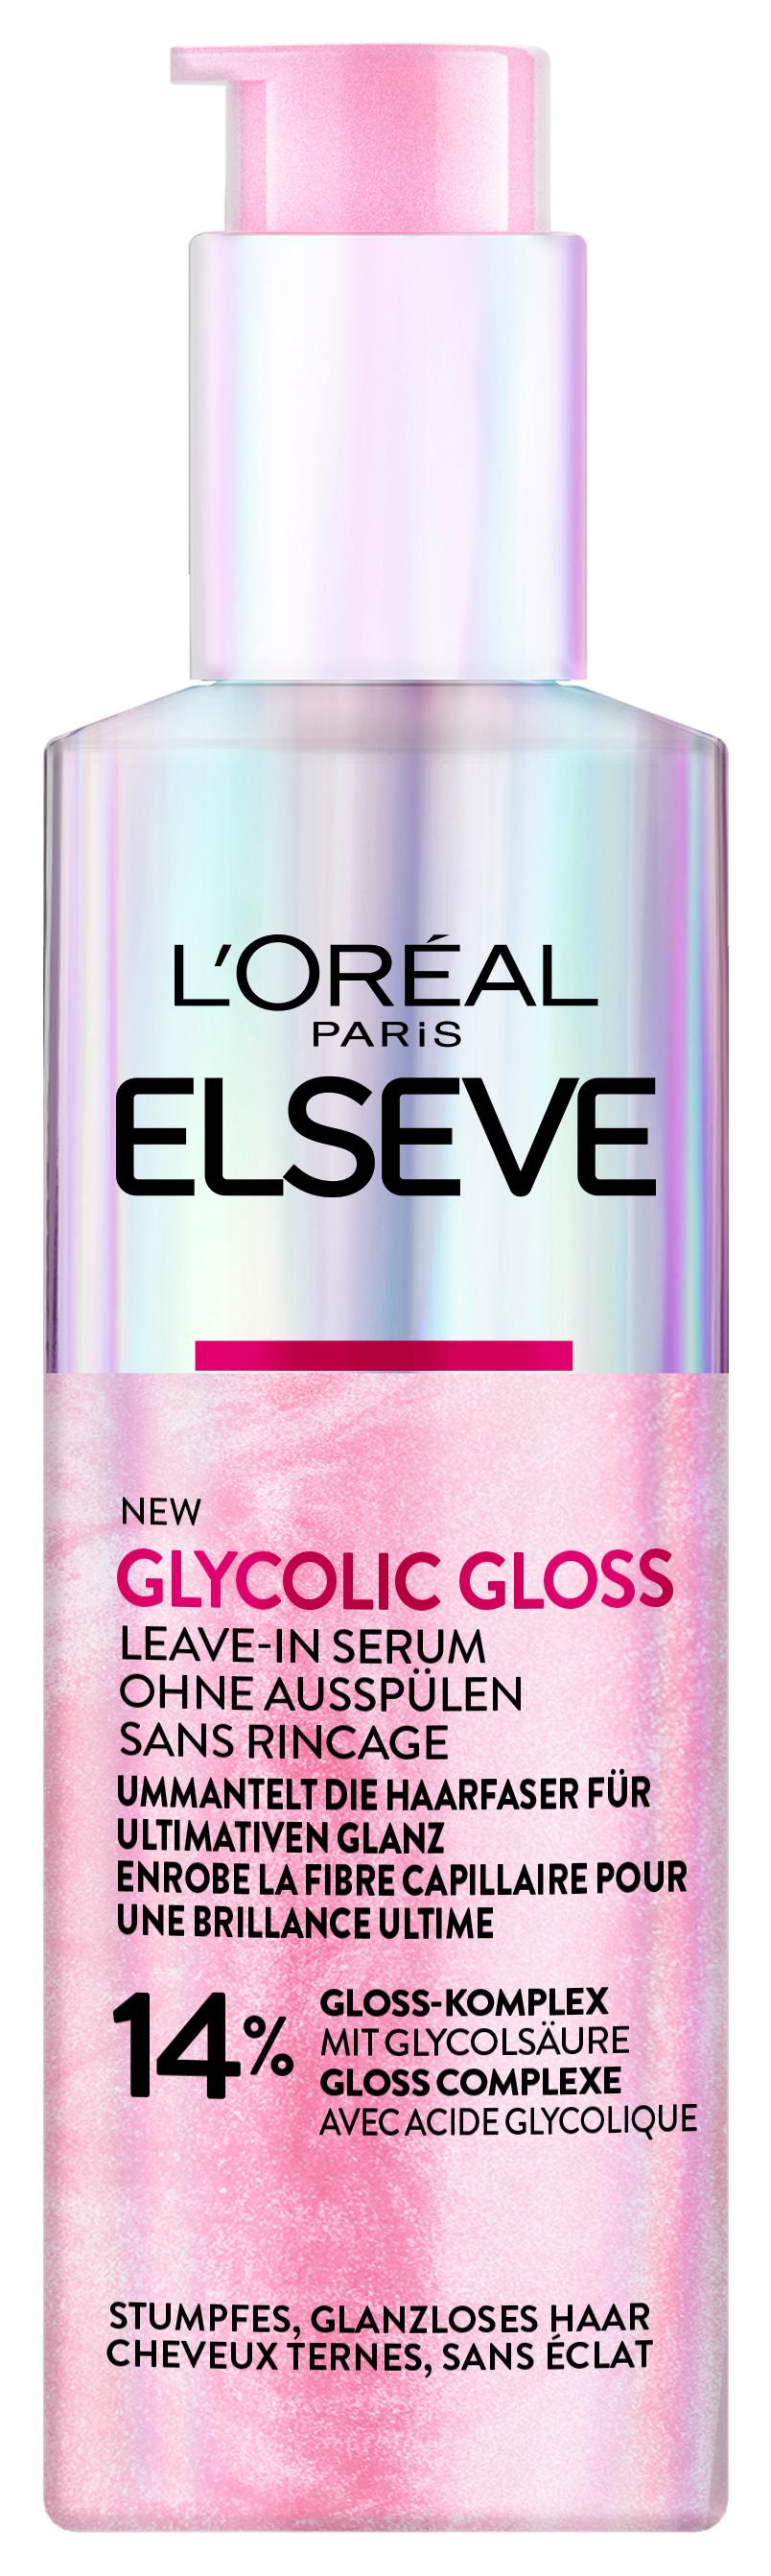 LOréal Elseve Haircare - Glycolic Gloss Serum